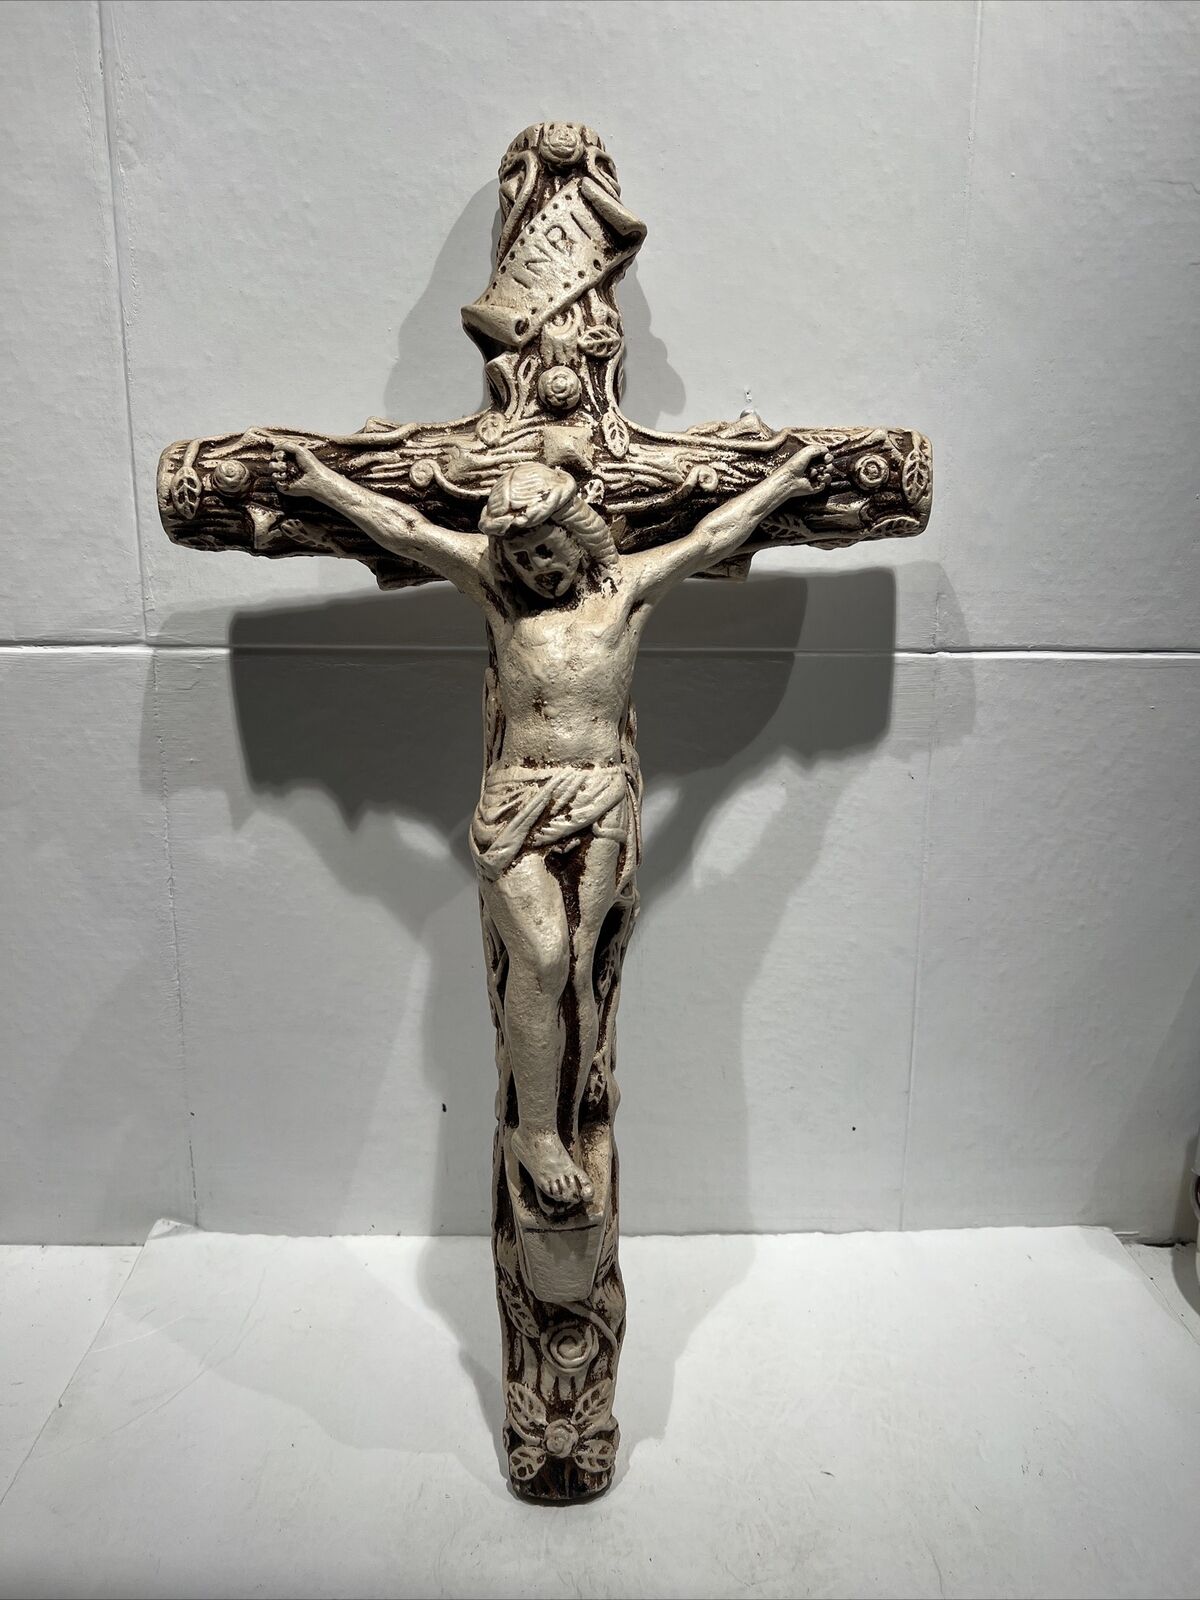 Vtg Large Chalkware Heavy INRI Crucifix Cross Wall Art 13x22 inch Jesus Christ